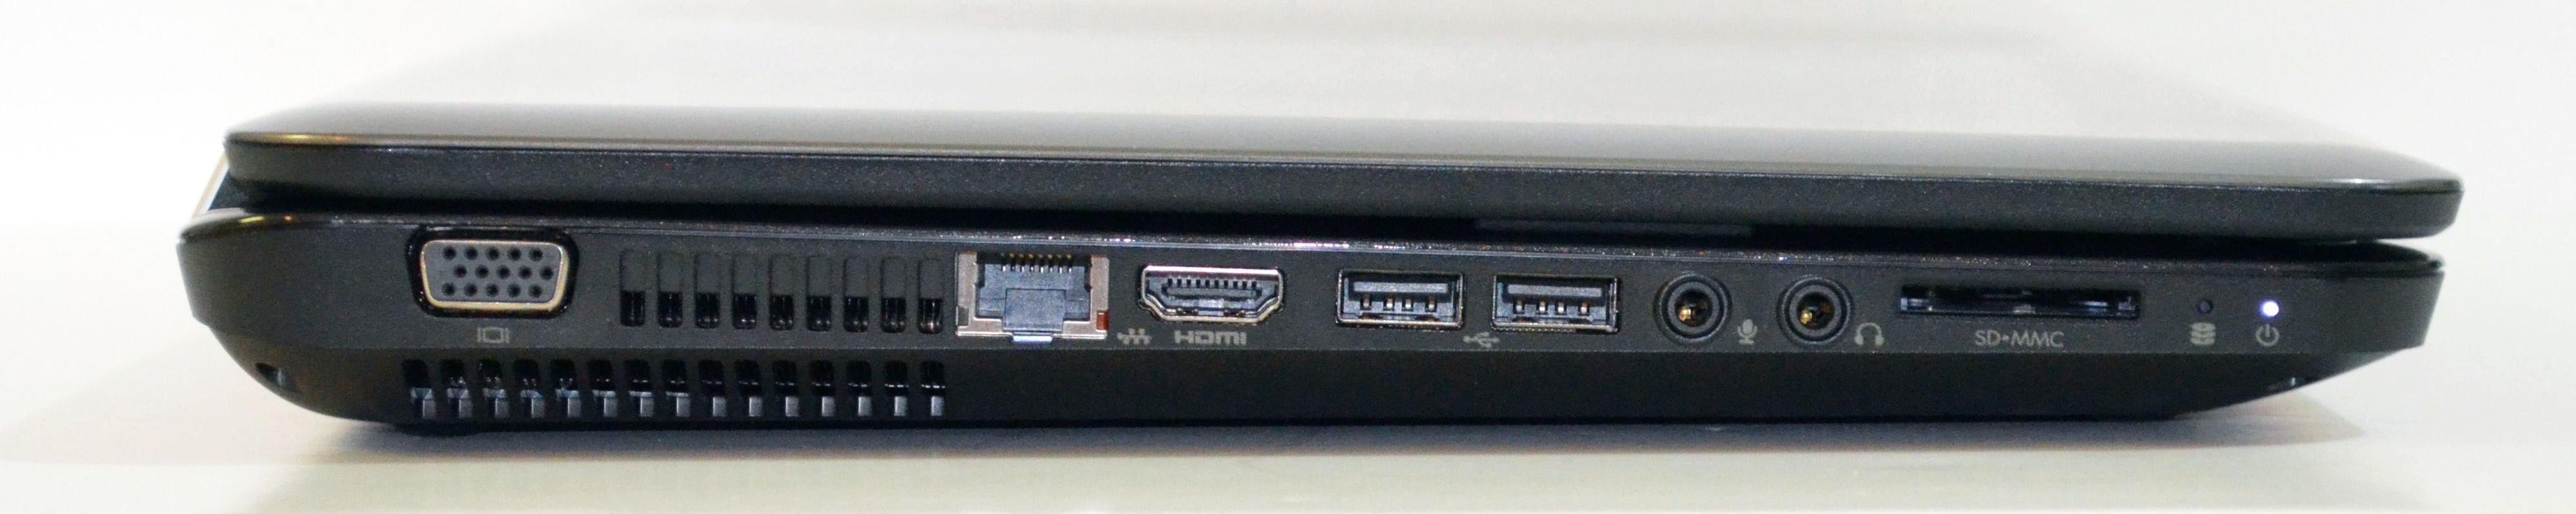 http://notebooks.com/wp-content/uploads/2011/07/HP-Pavilion-g6-left-side-ports.jpg